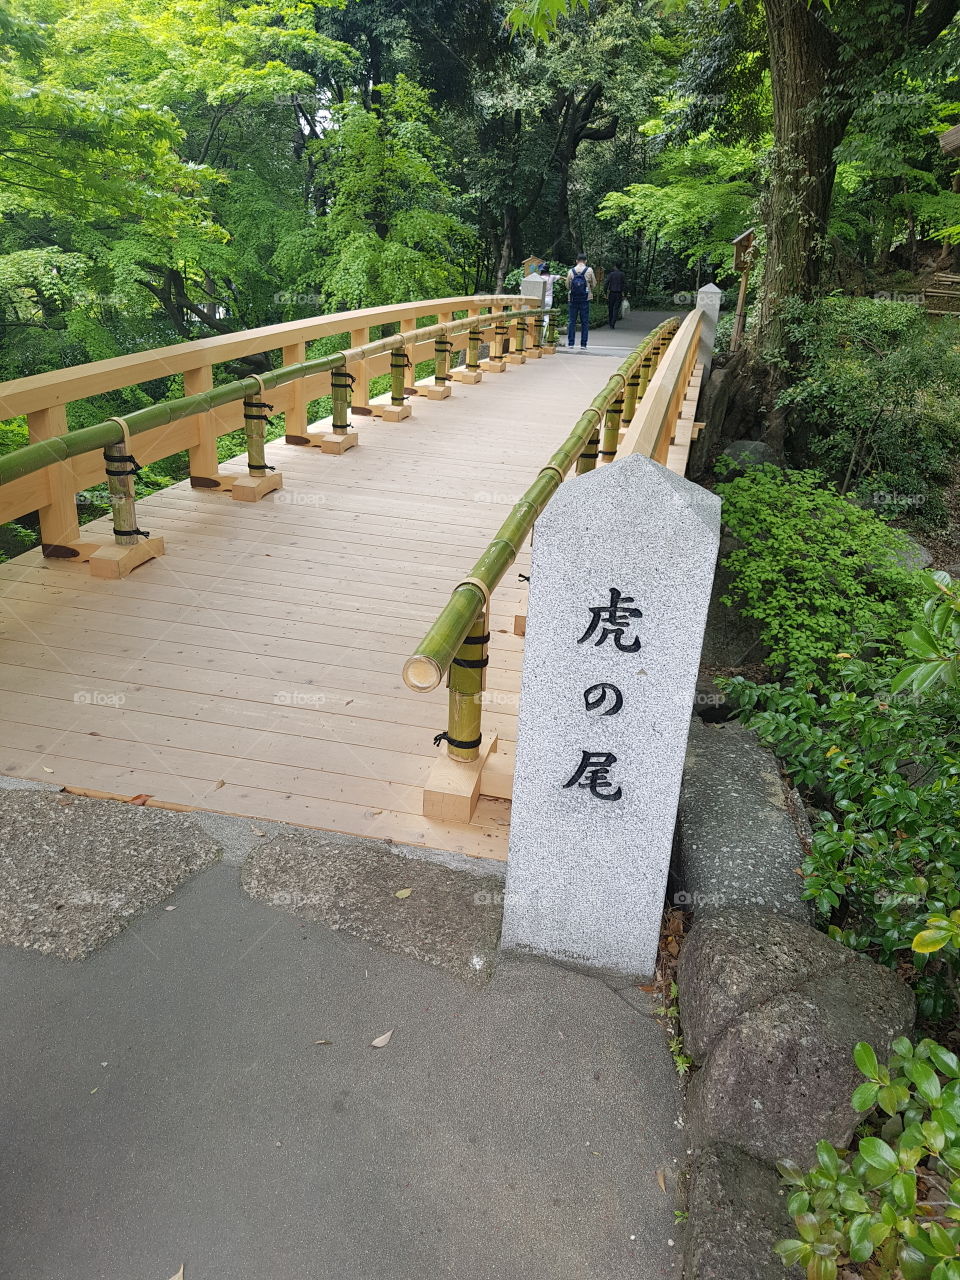 The bridge leading into the Tokugawa gardens.